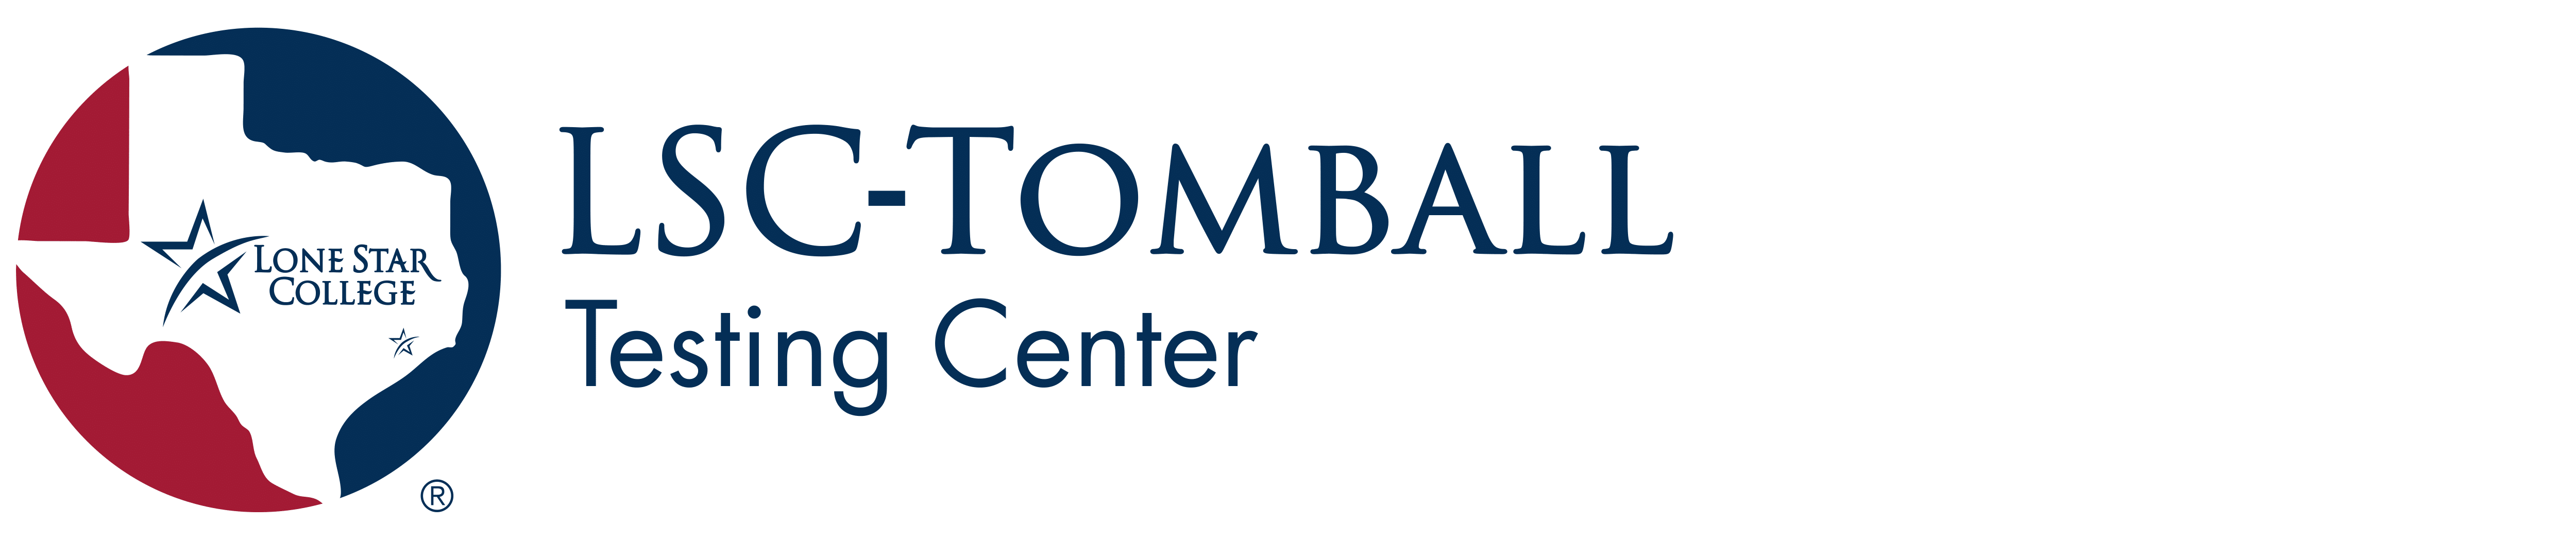 LSC-Tomball Exam Registration